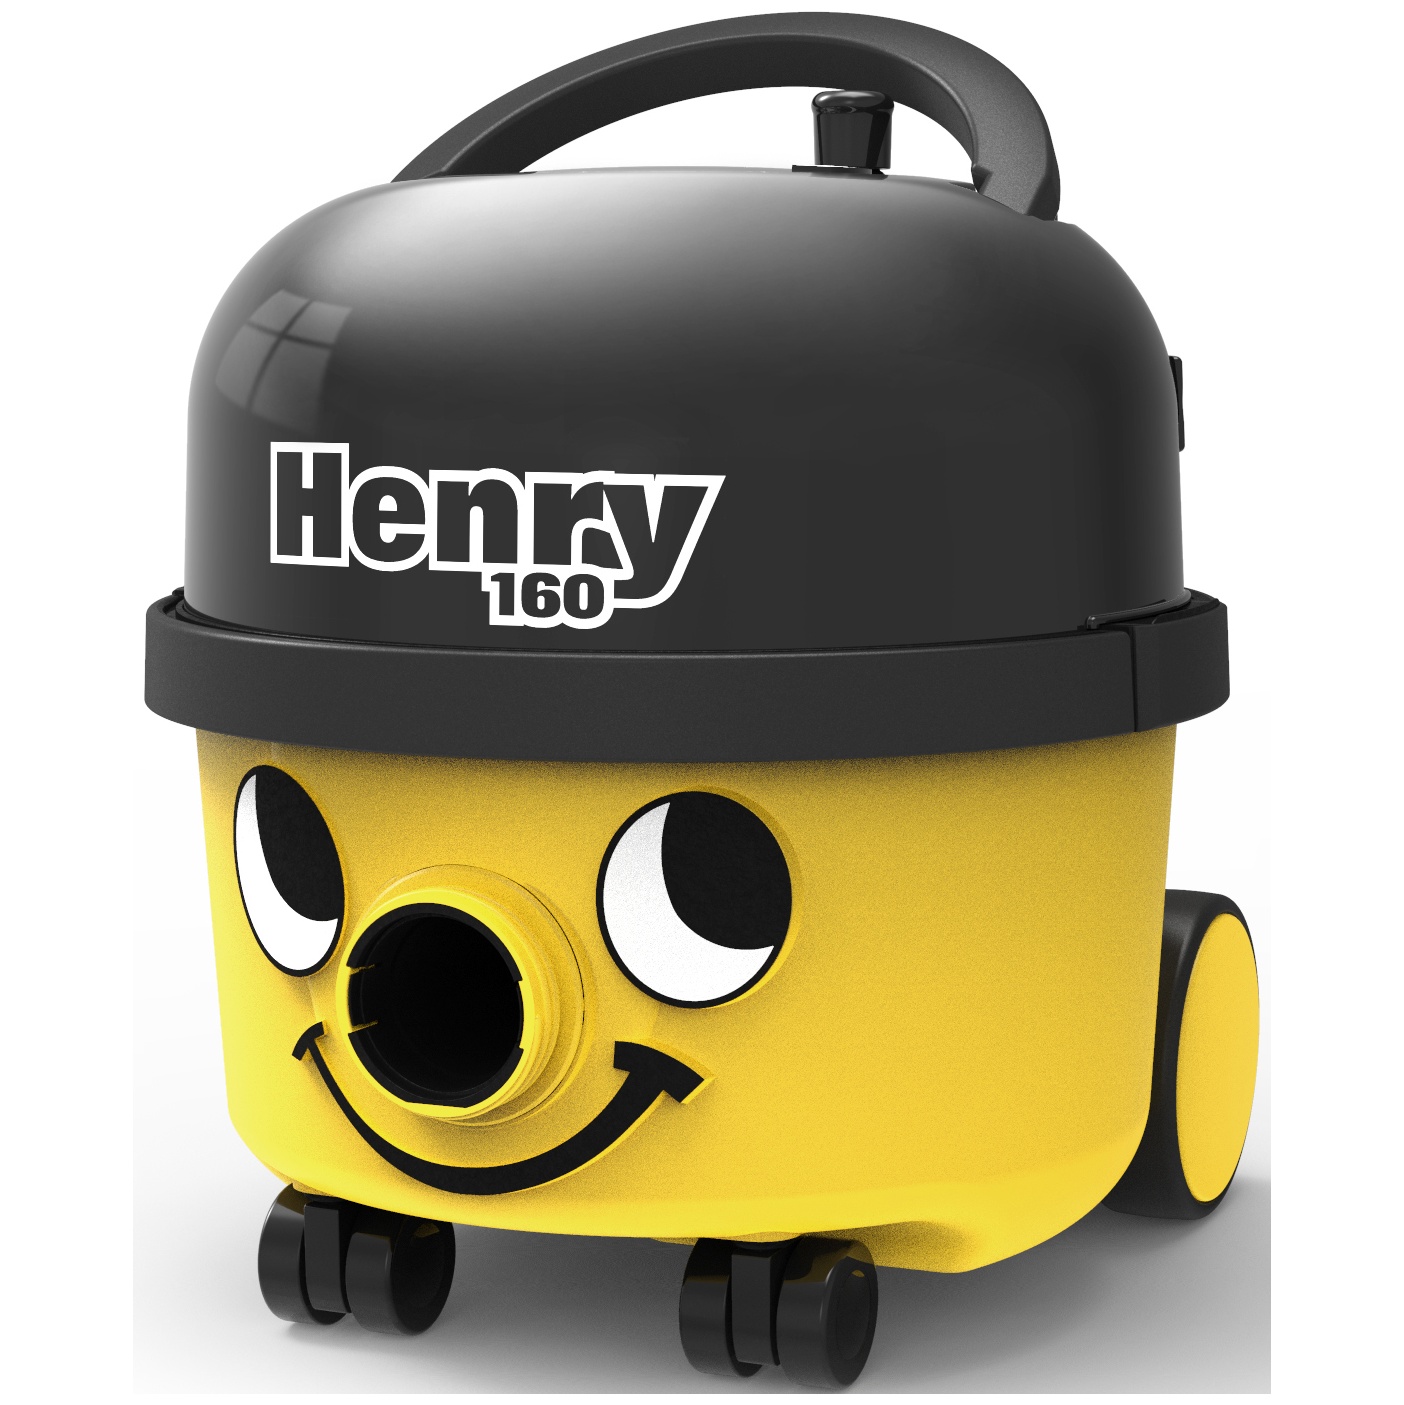 Numatic Henry Vacuum Cleaner HVR160